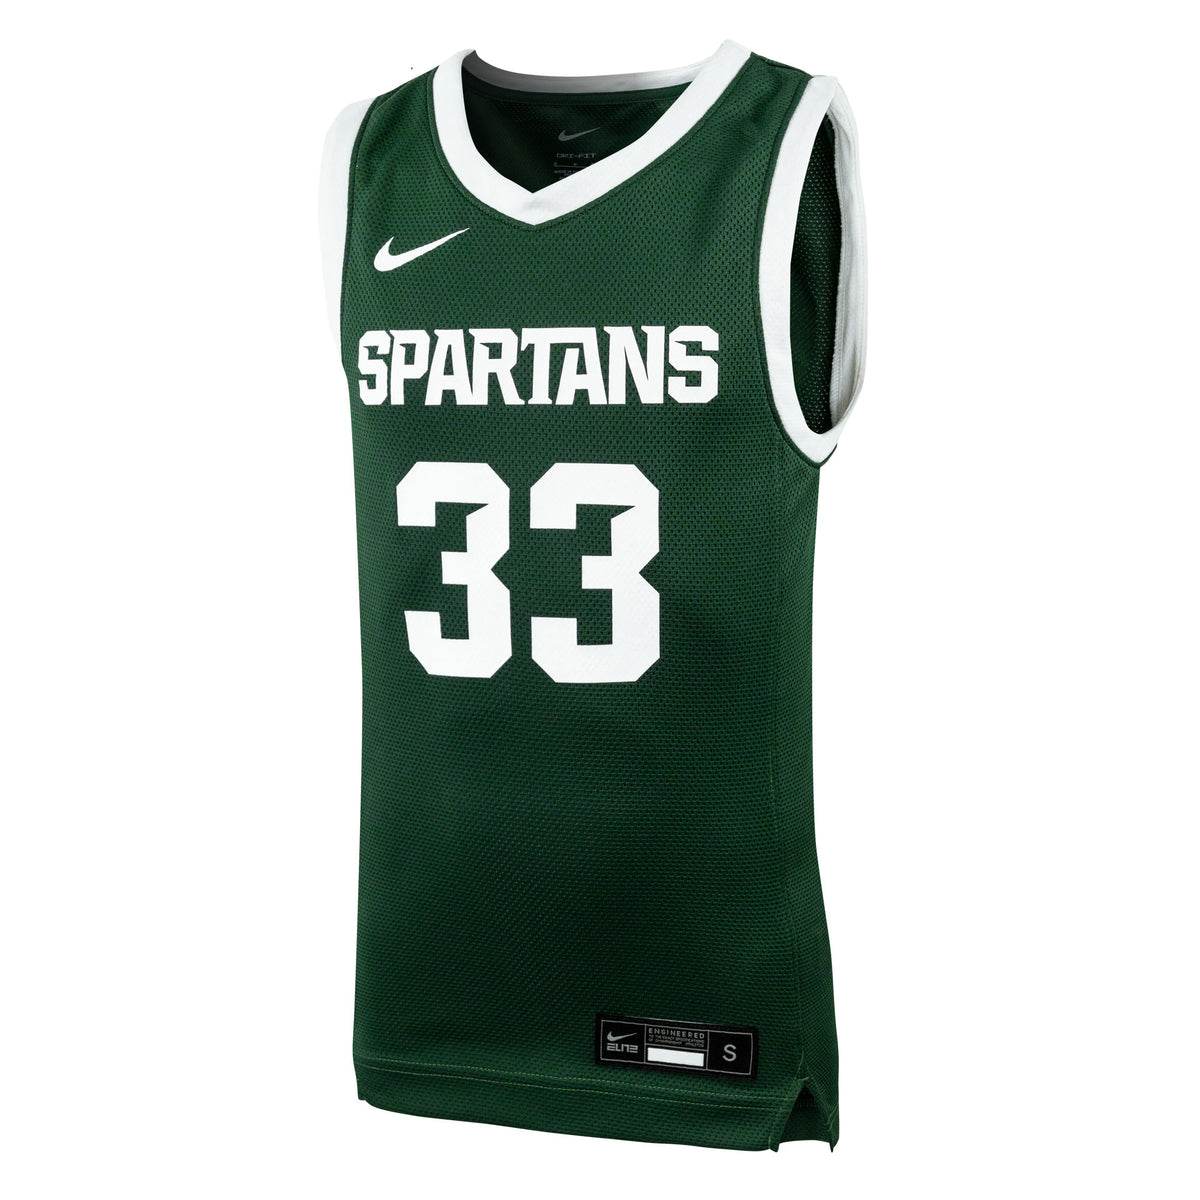 Michigan State Spartans Basketball Jersey Nike Elite Boys Youth Medium 12  14 #14